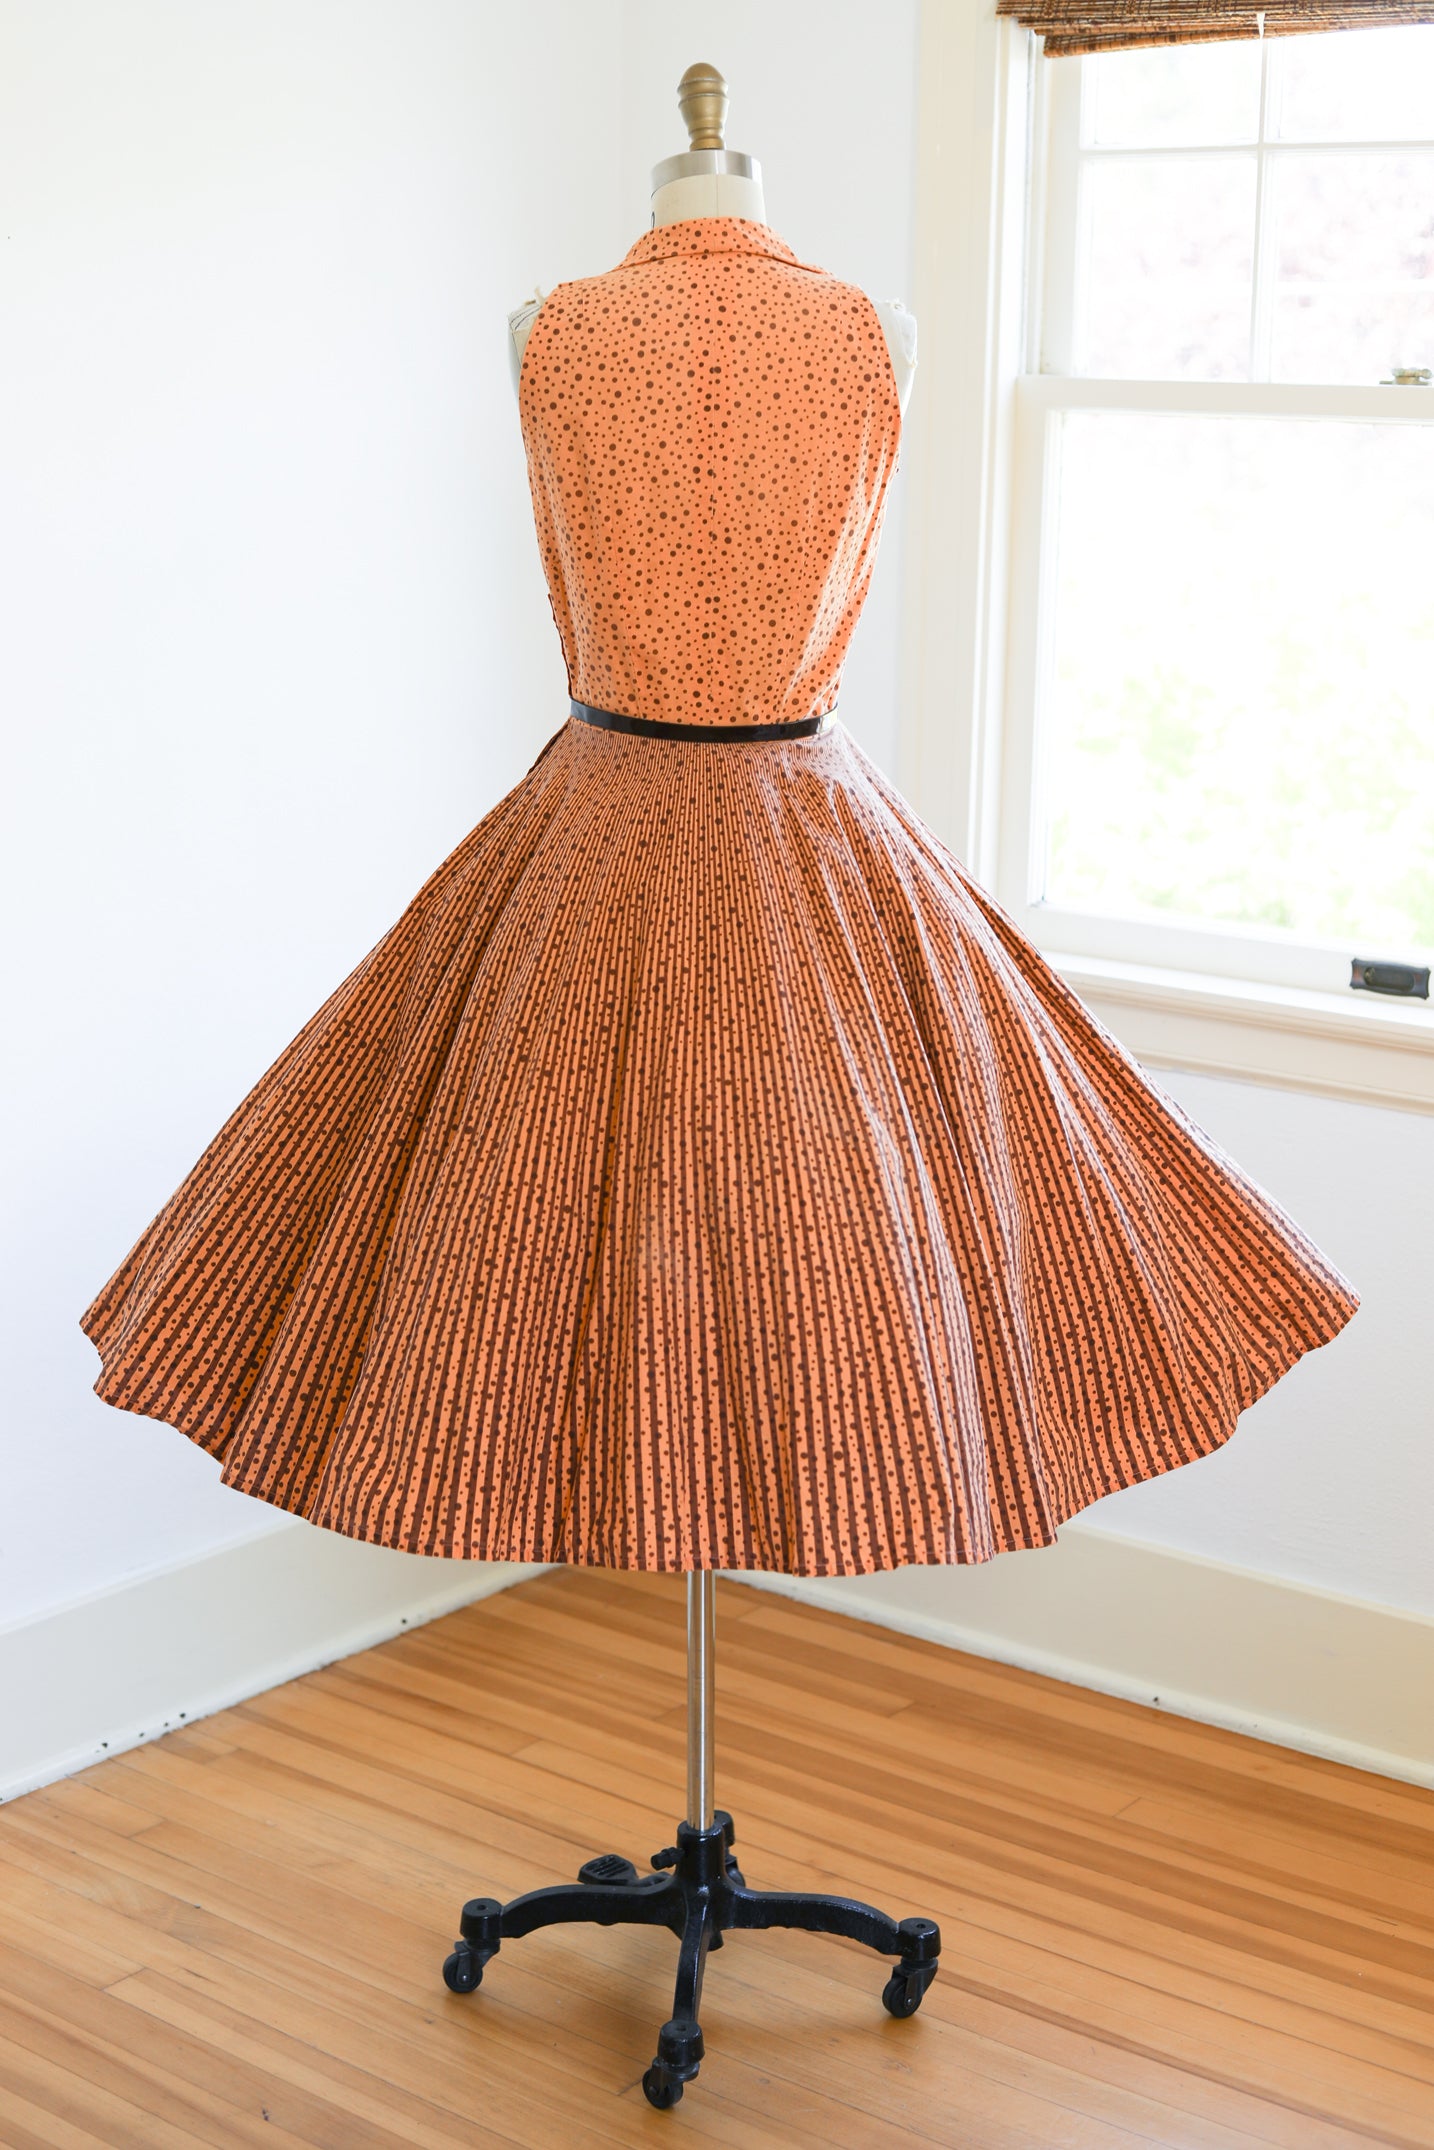 Vintage 1950s Dress - AMAZING Polka Dot + Graphic Stripe Peach & Cocoa Cotton Circle Skirt Sundress Size S